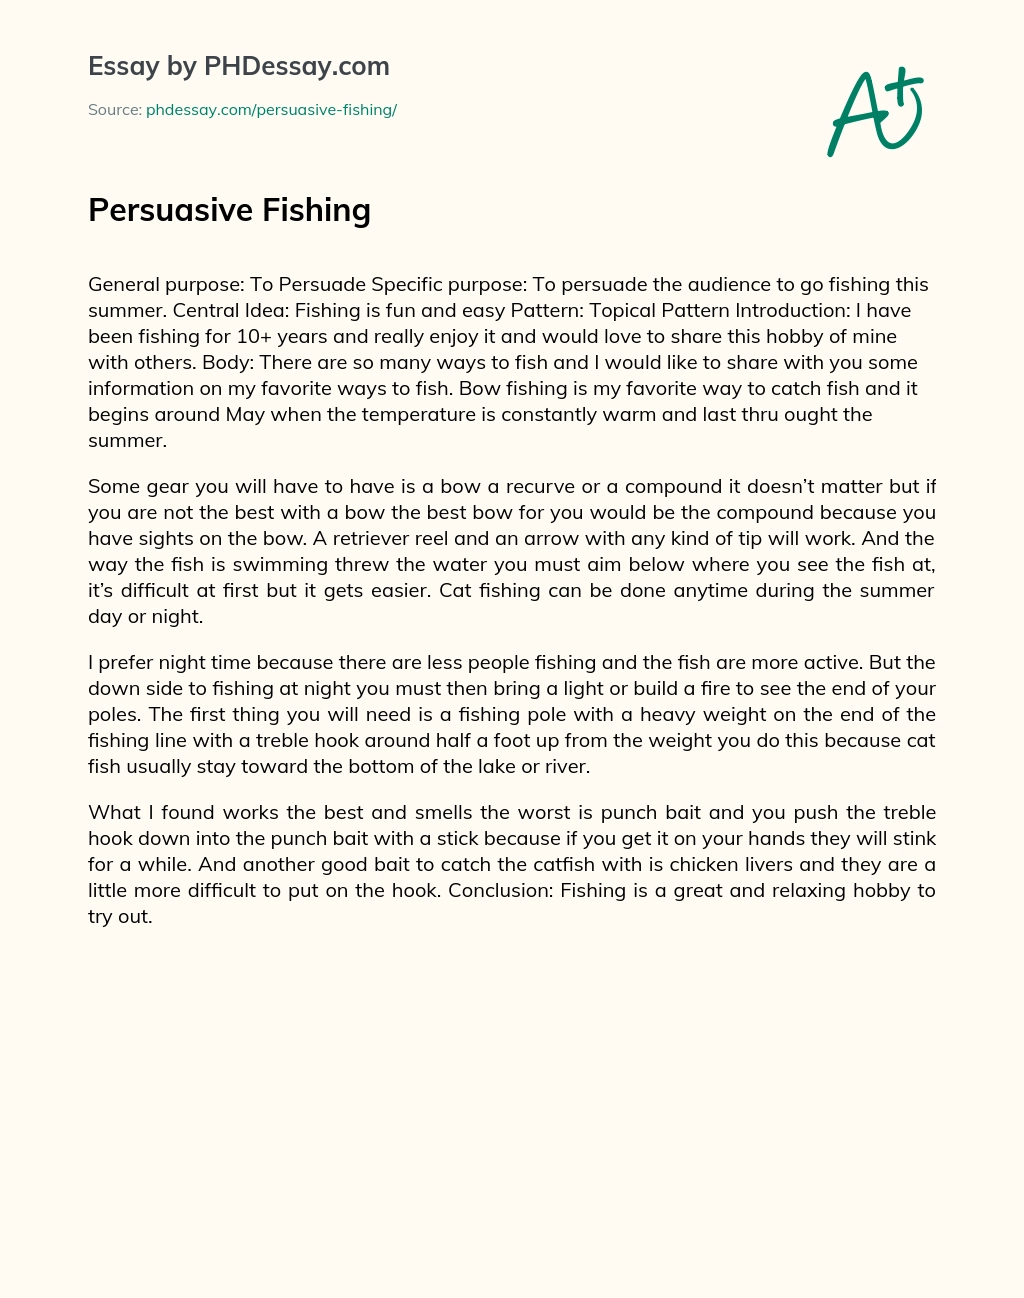 Persuasive Fishing essay